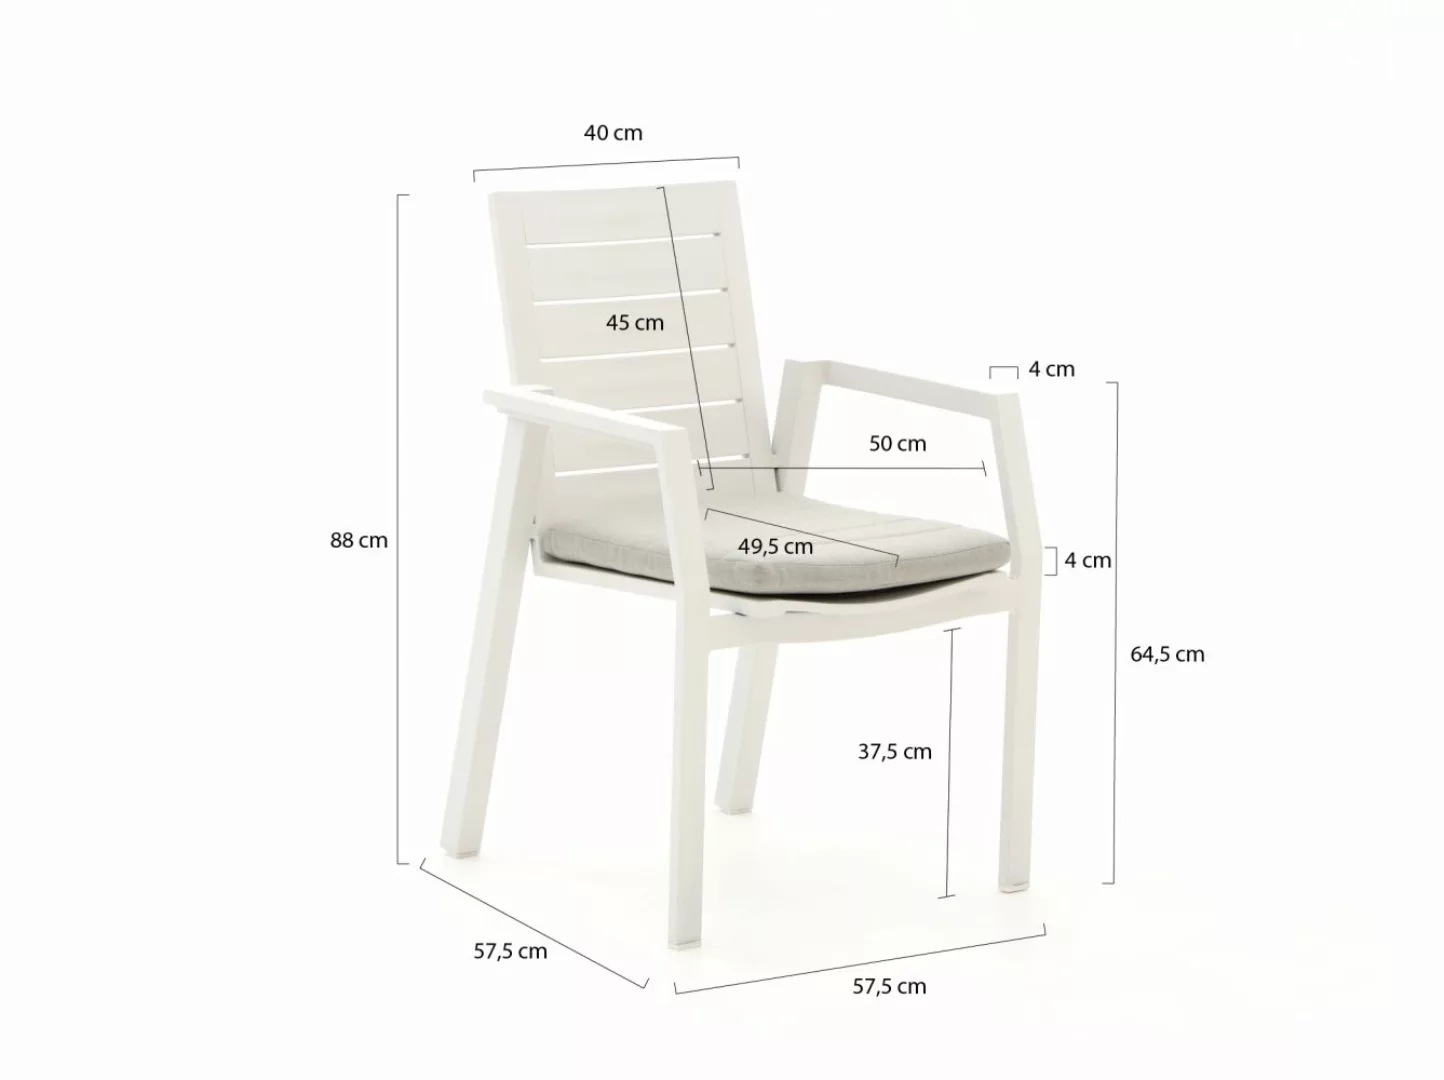 Bellagio Leggo 270 cm Gartenmöbel-Set 11-teilig stapelbar günstig online kaufen